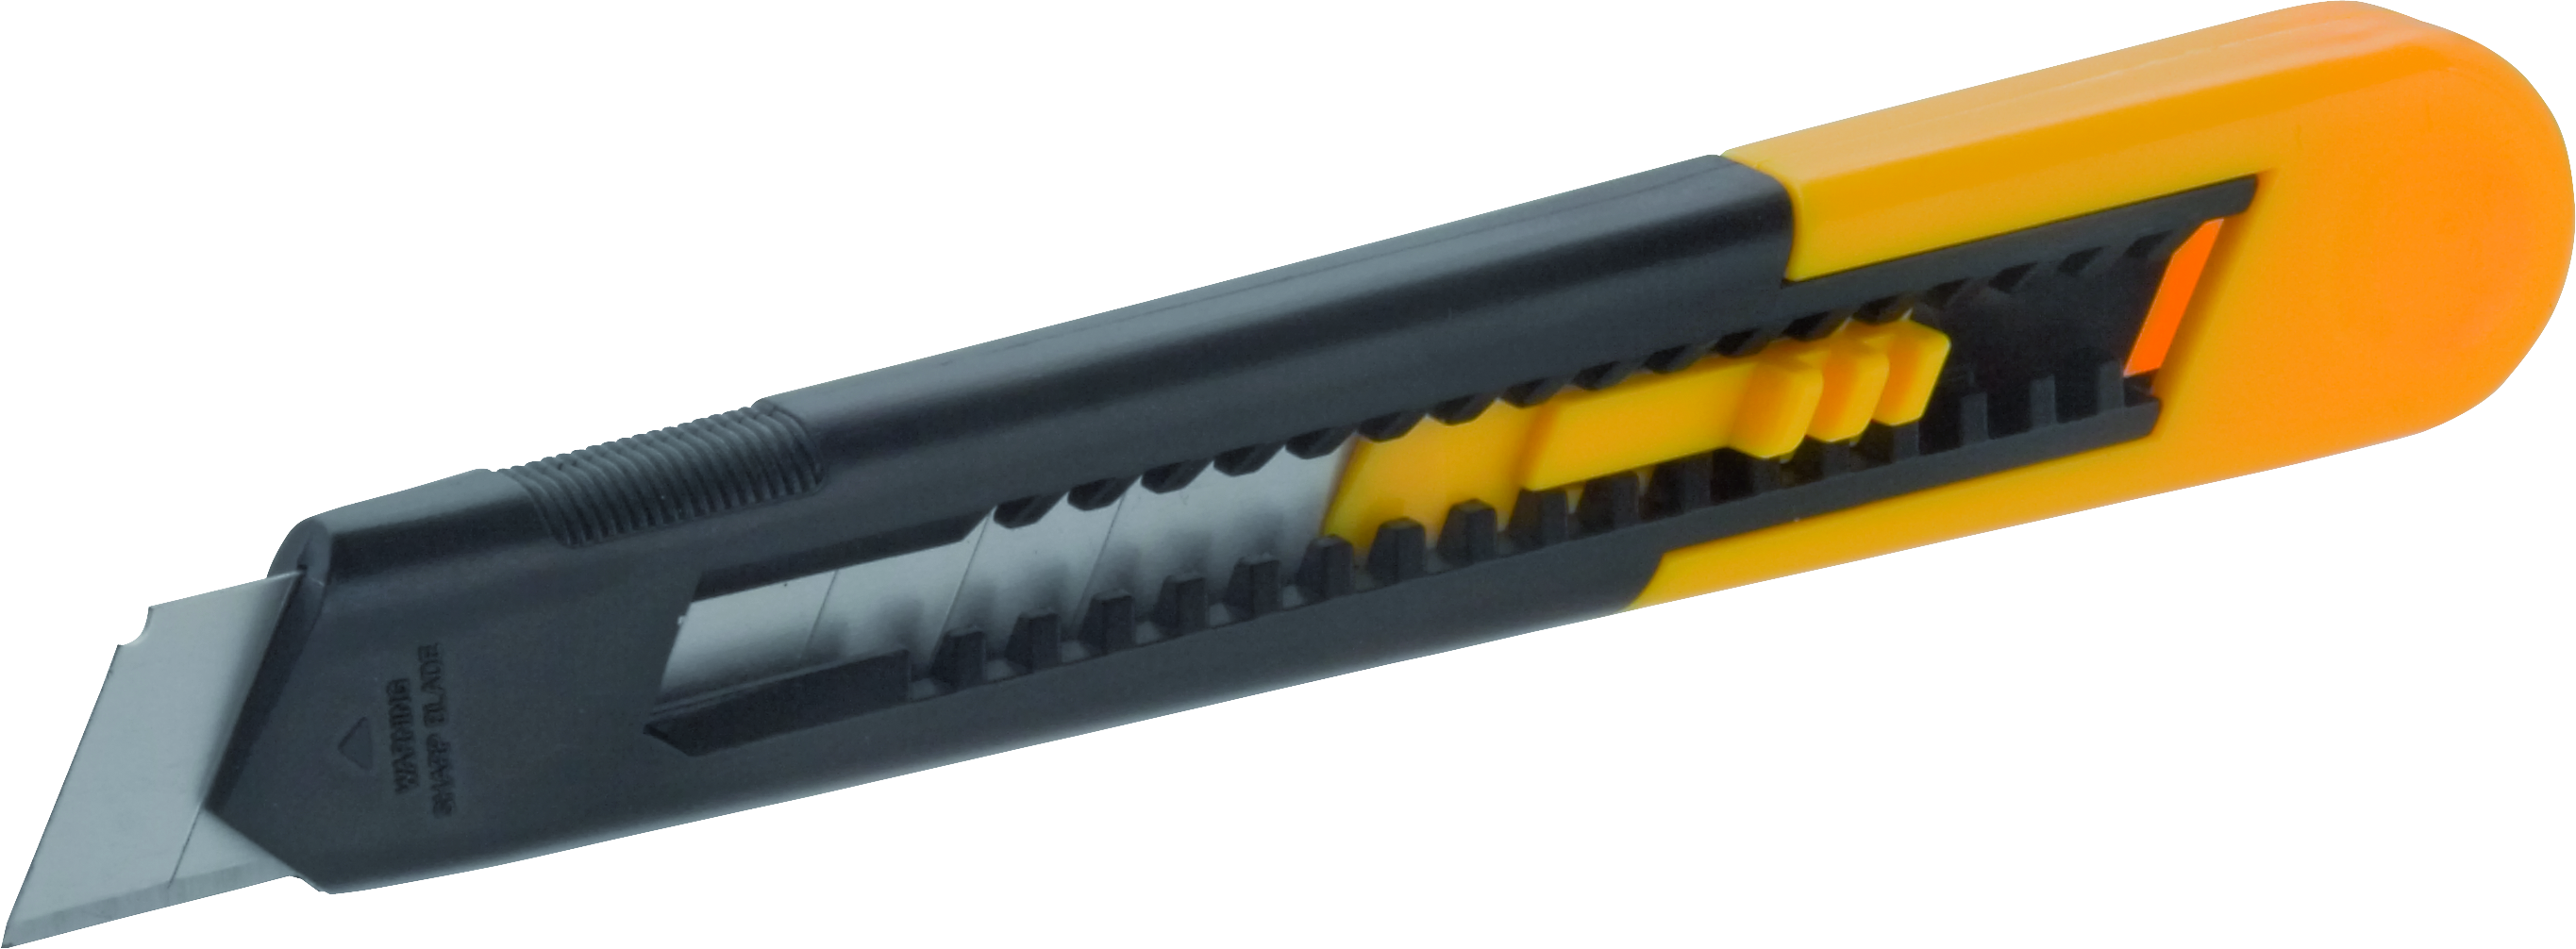 MN-63-019 Universal knife 18 mm